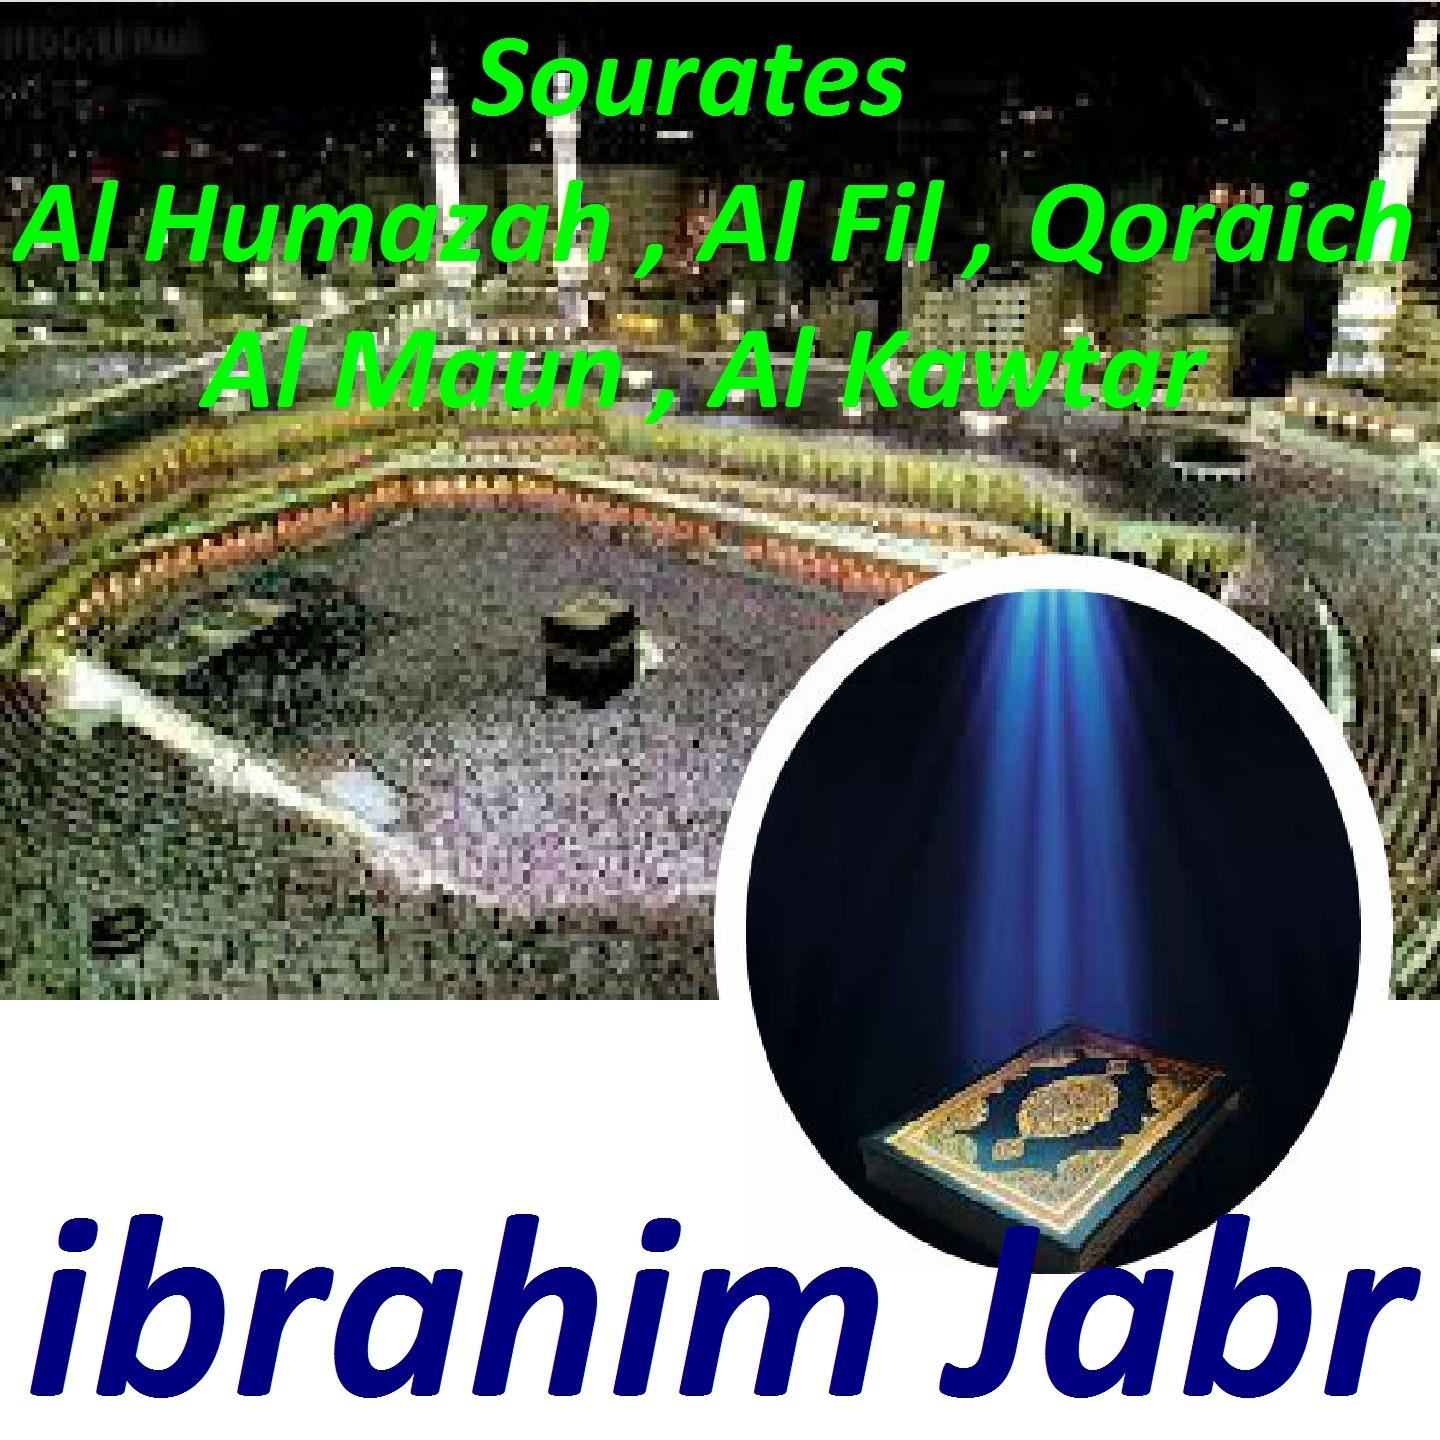 Постер альбома Sourates Al Humazah, Al Fil, Qoraich, Al Maun, Al Kawtar